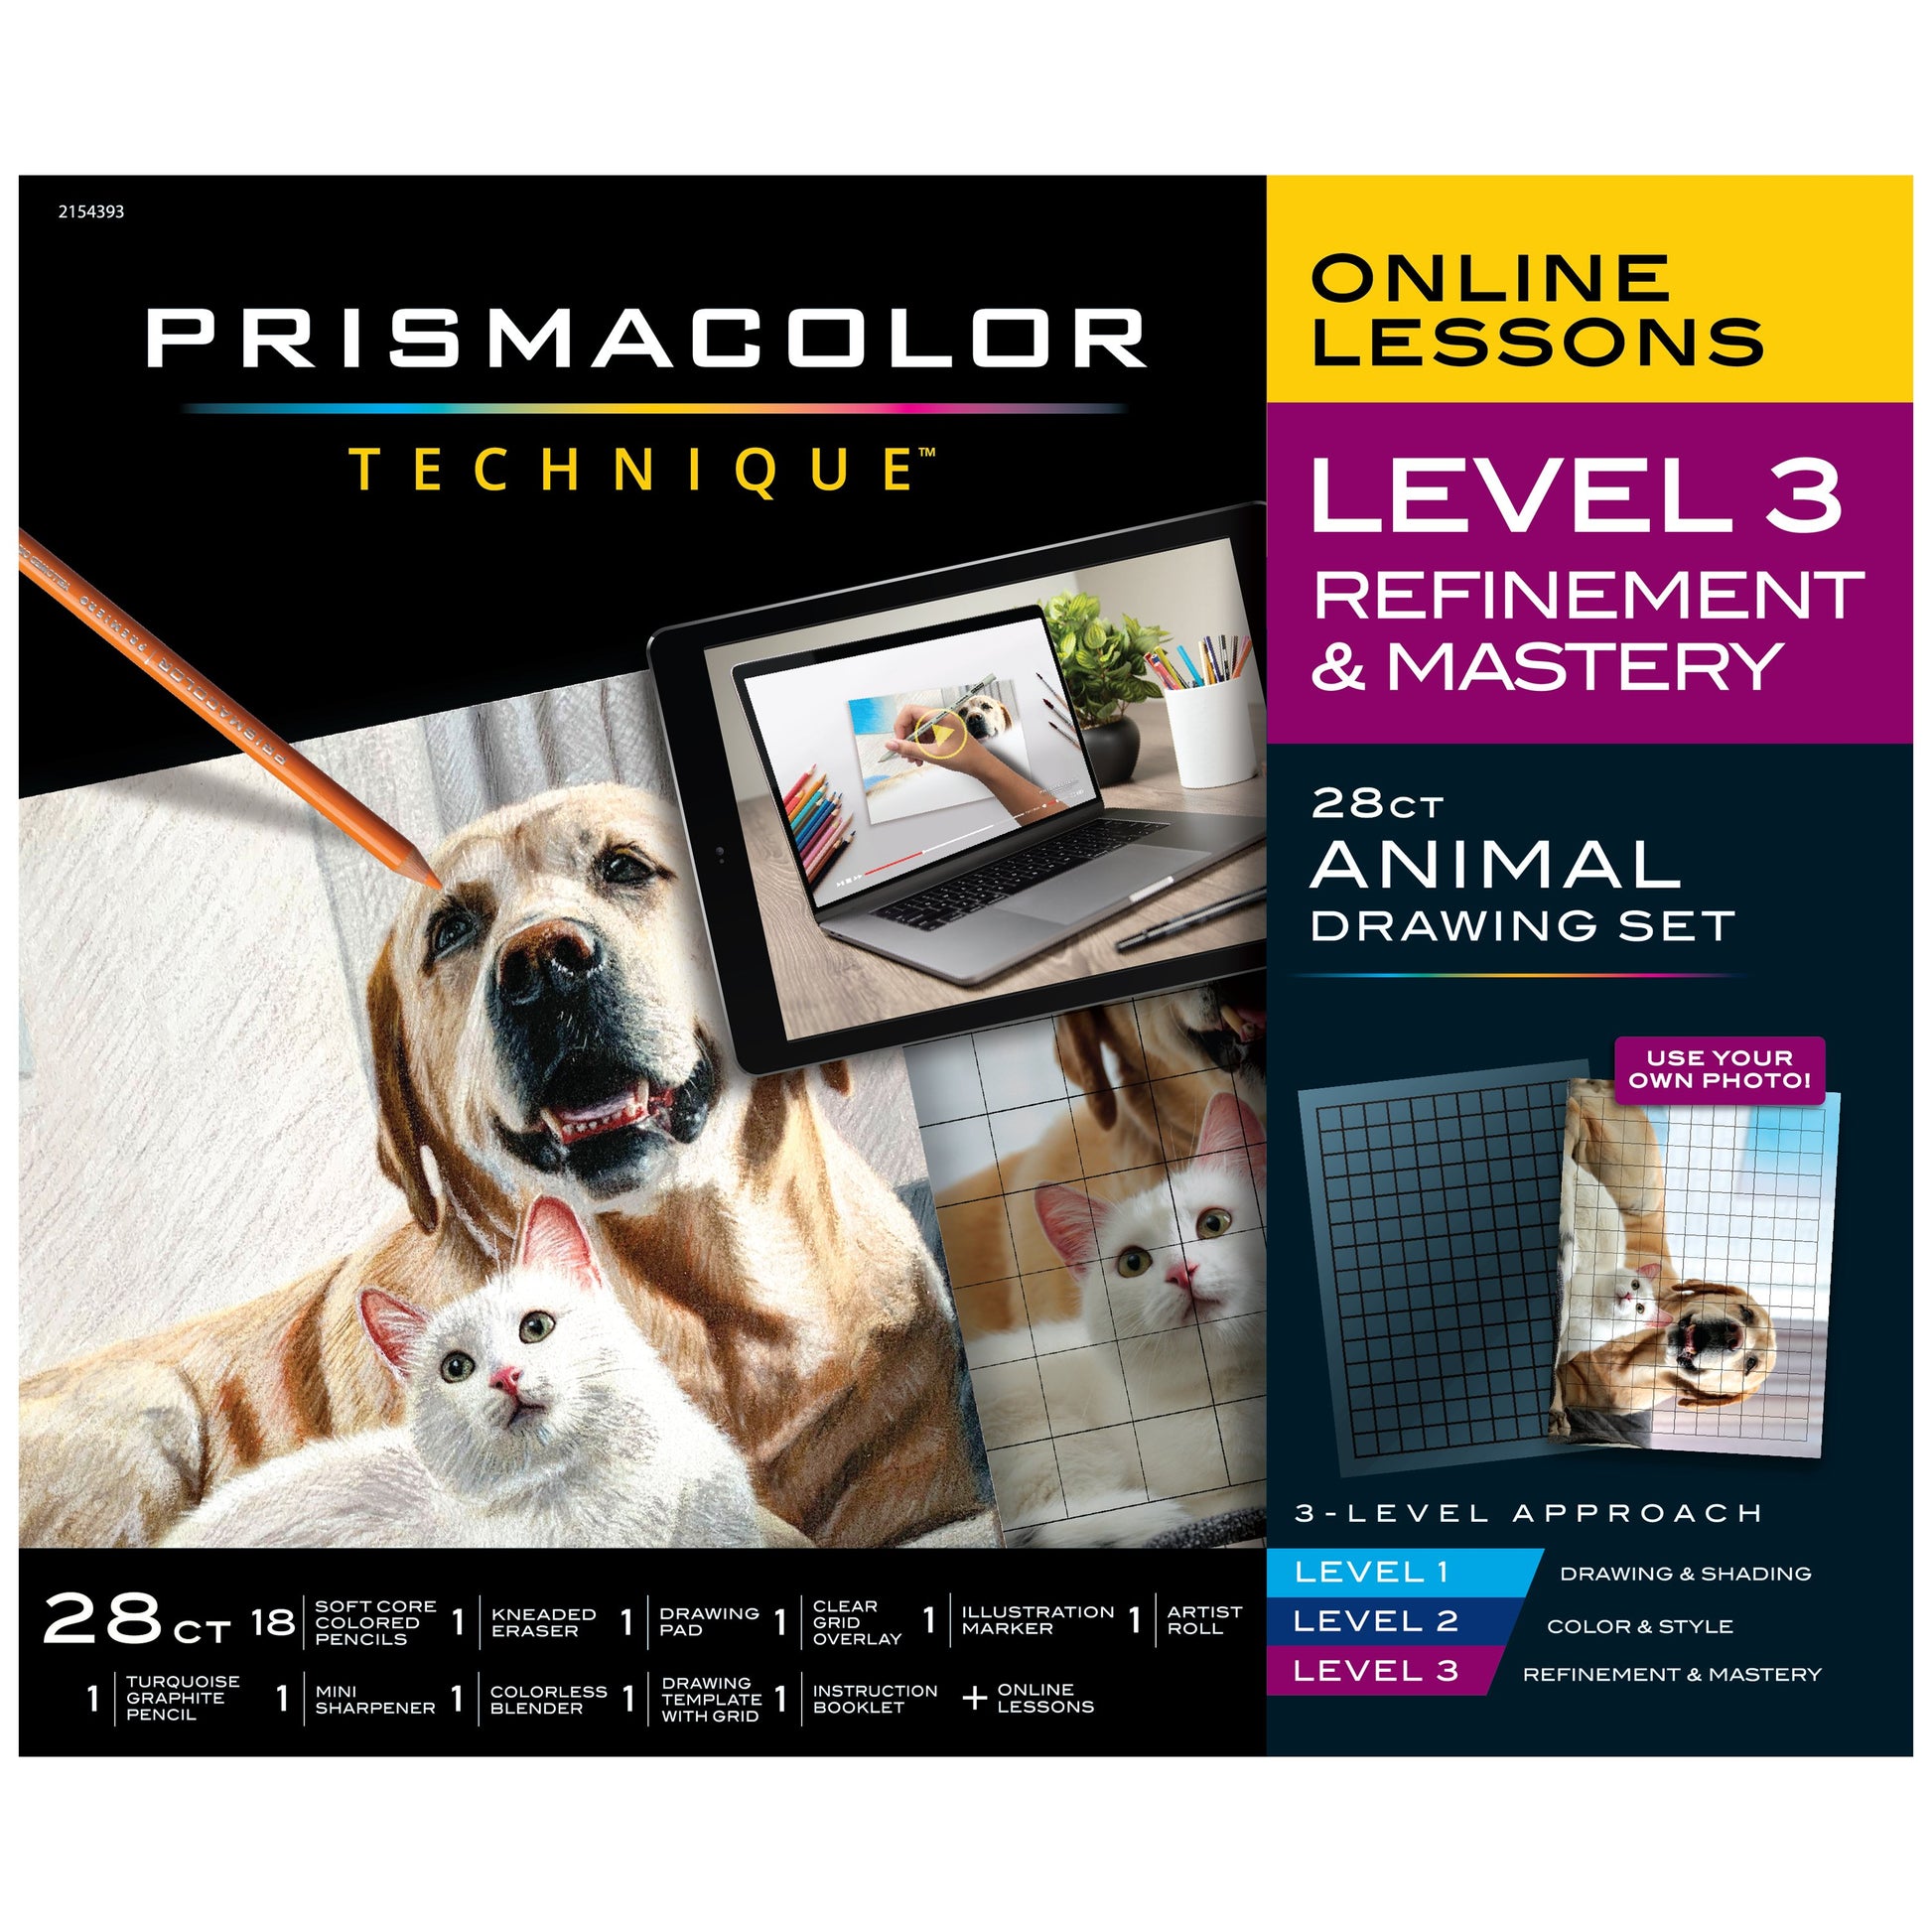 Prismacolor Technique Drawing Set, Level 2 Color & Style, 27-Piece Animal  Drawing Set 